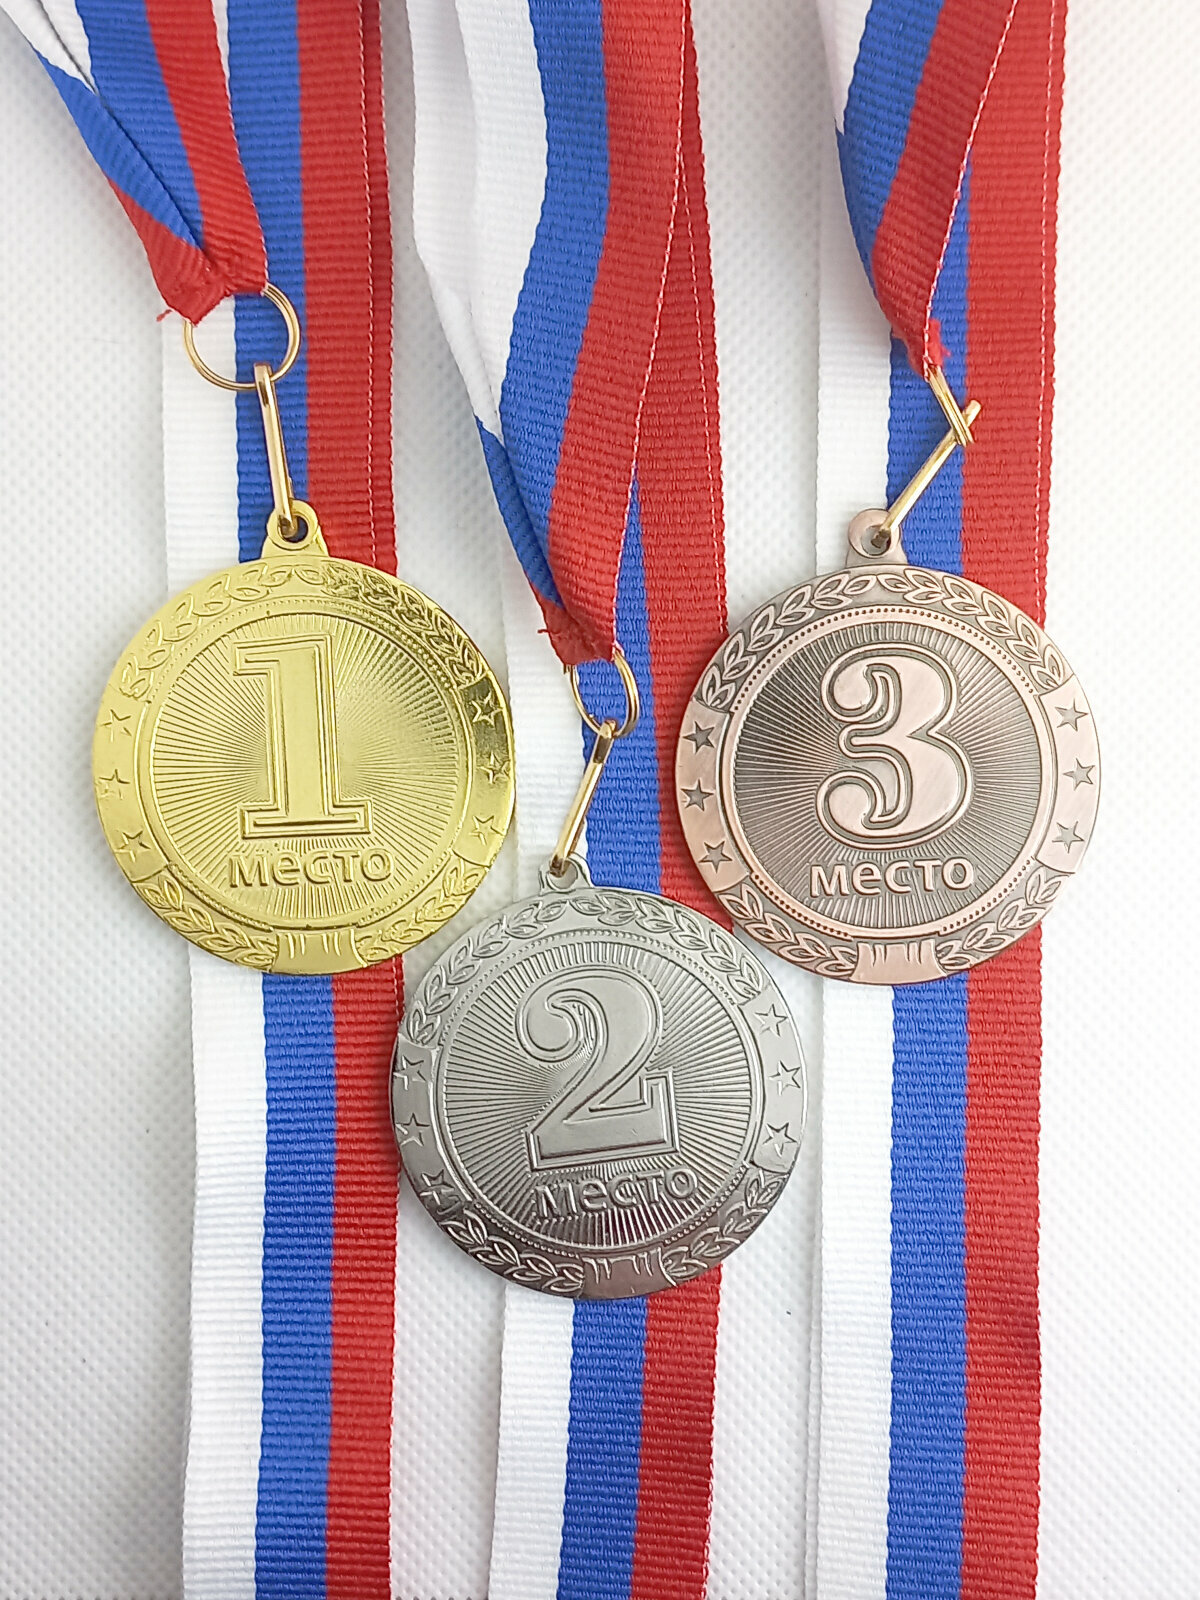 Комплект металлических медалей "1, 2, 3 место" D45 мм. Лента в комплекте. Тип 4.